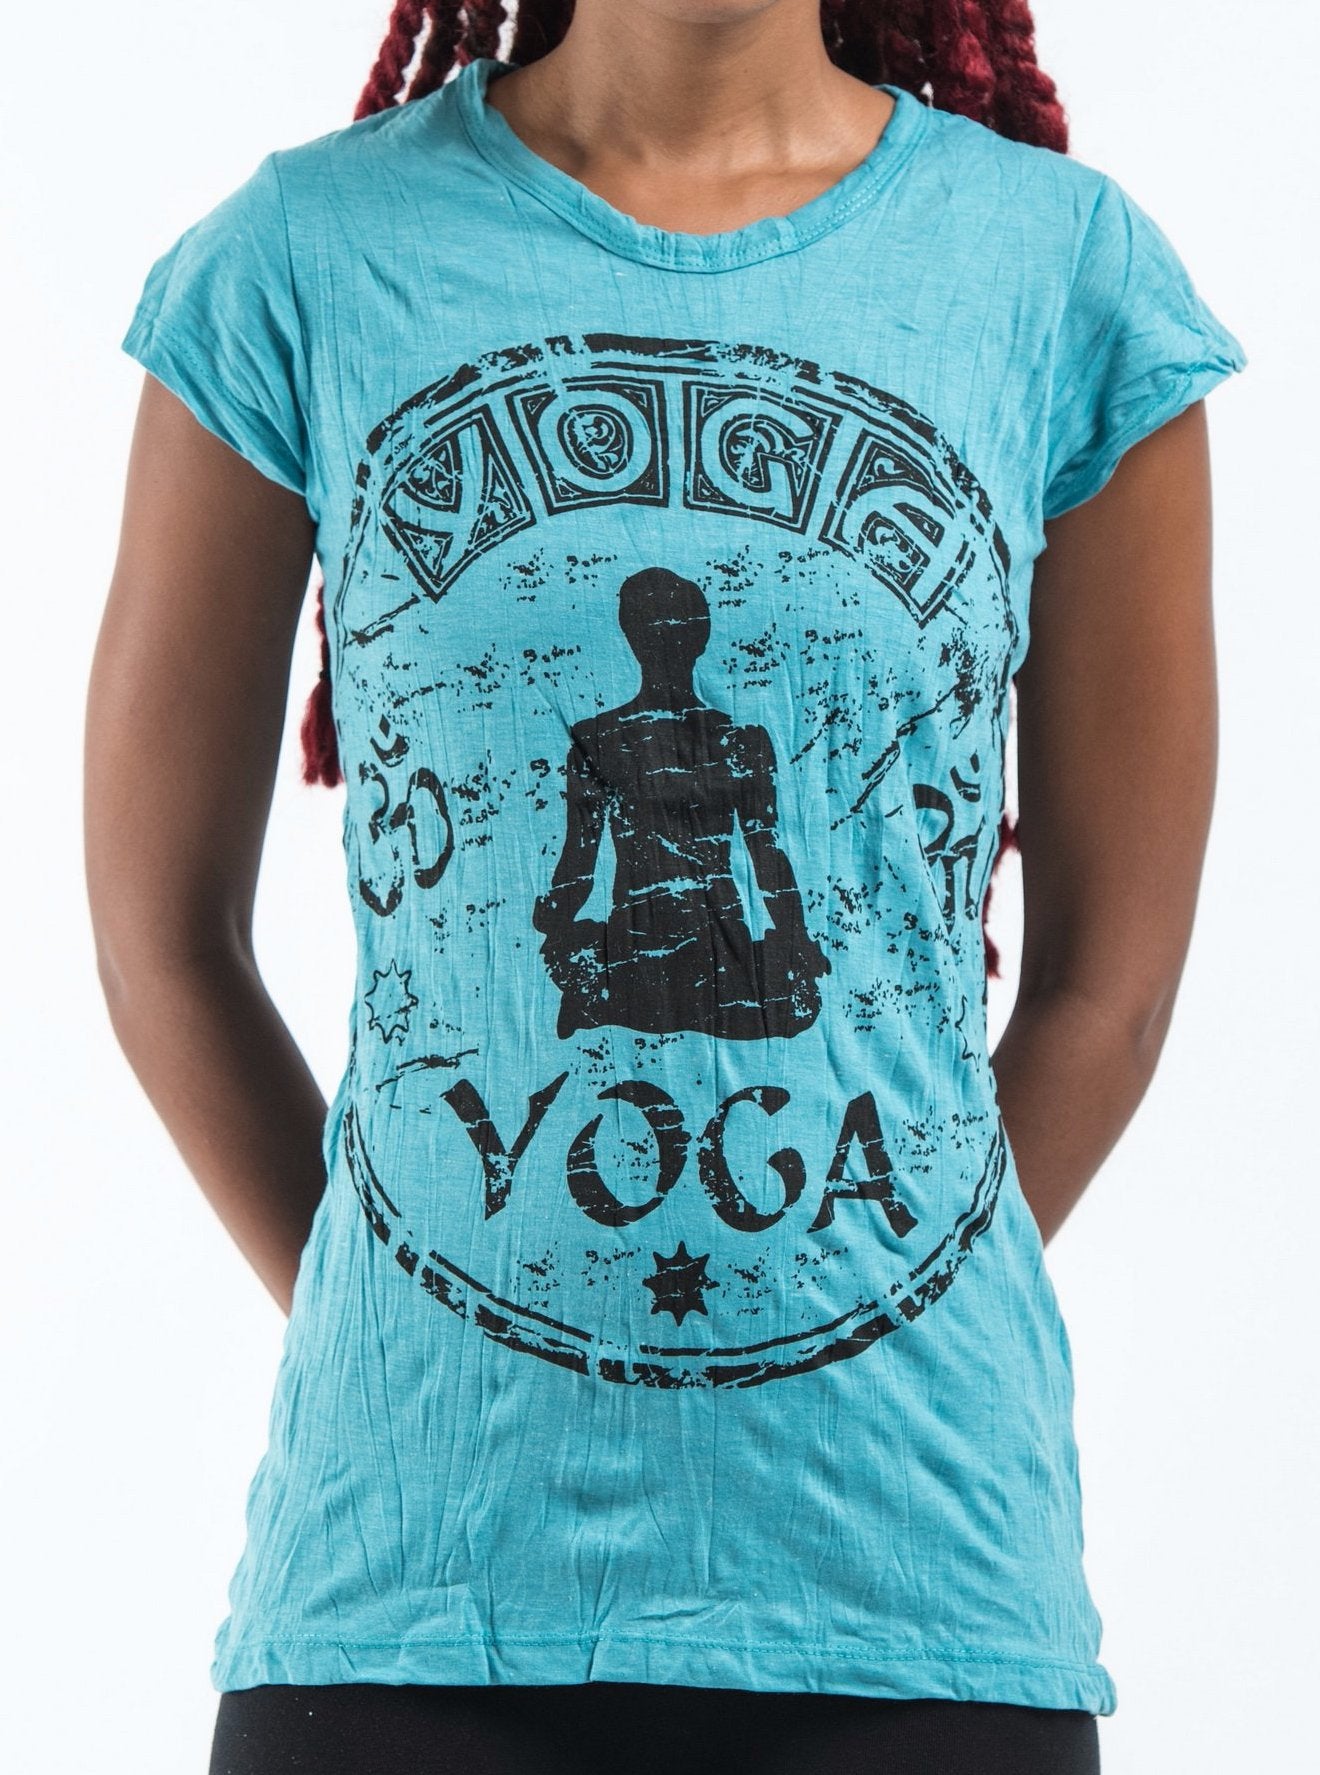 Buy Yoga T-Shirts, Yoga Print T-Shirt